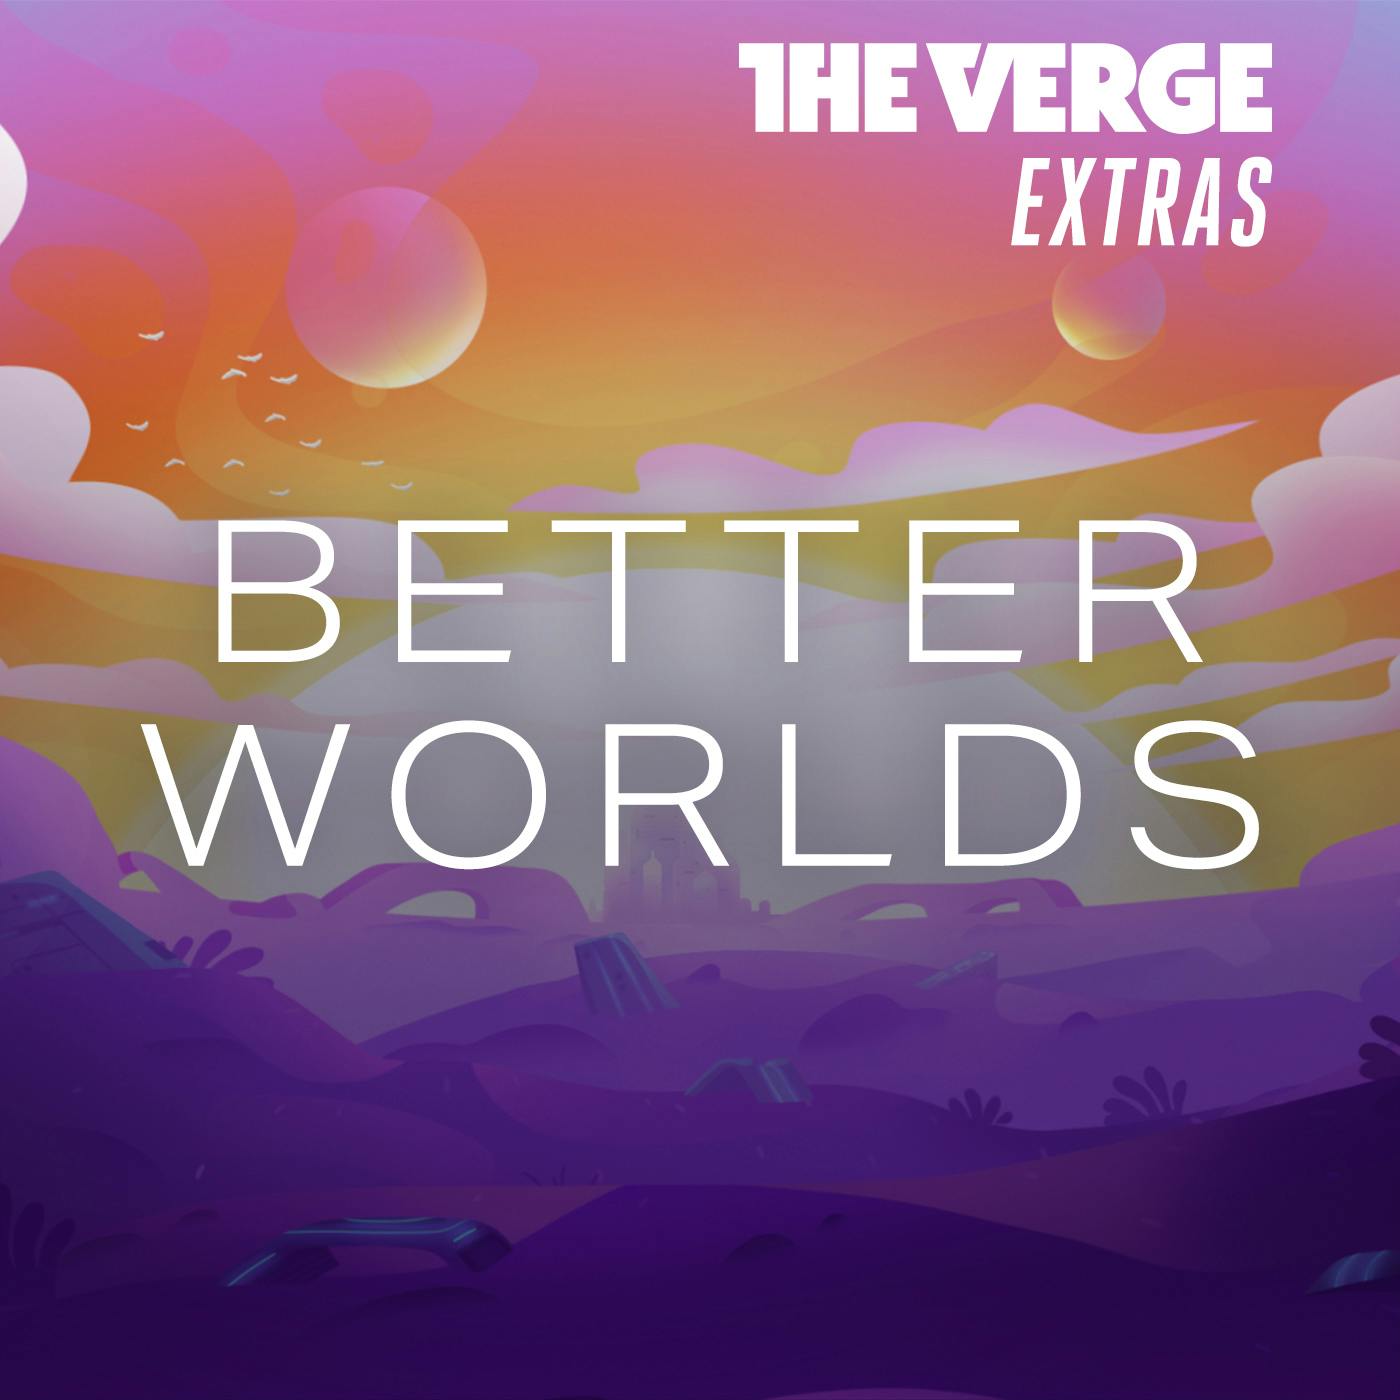 Introducing Better Worlds